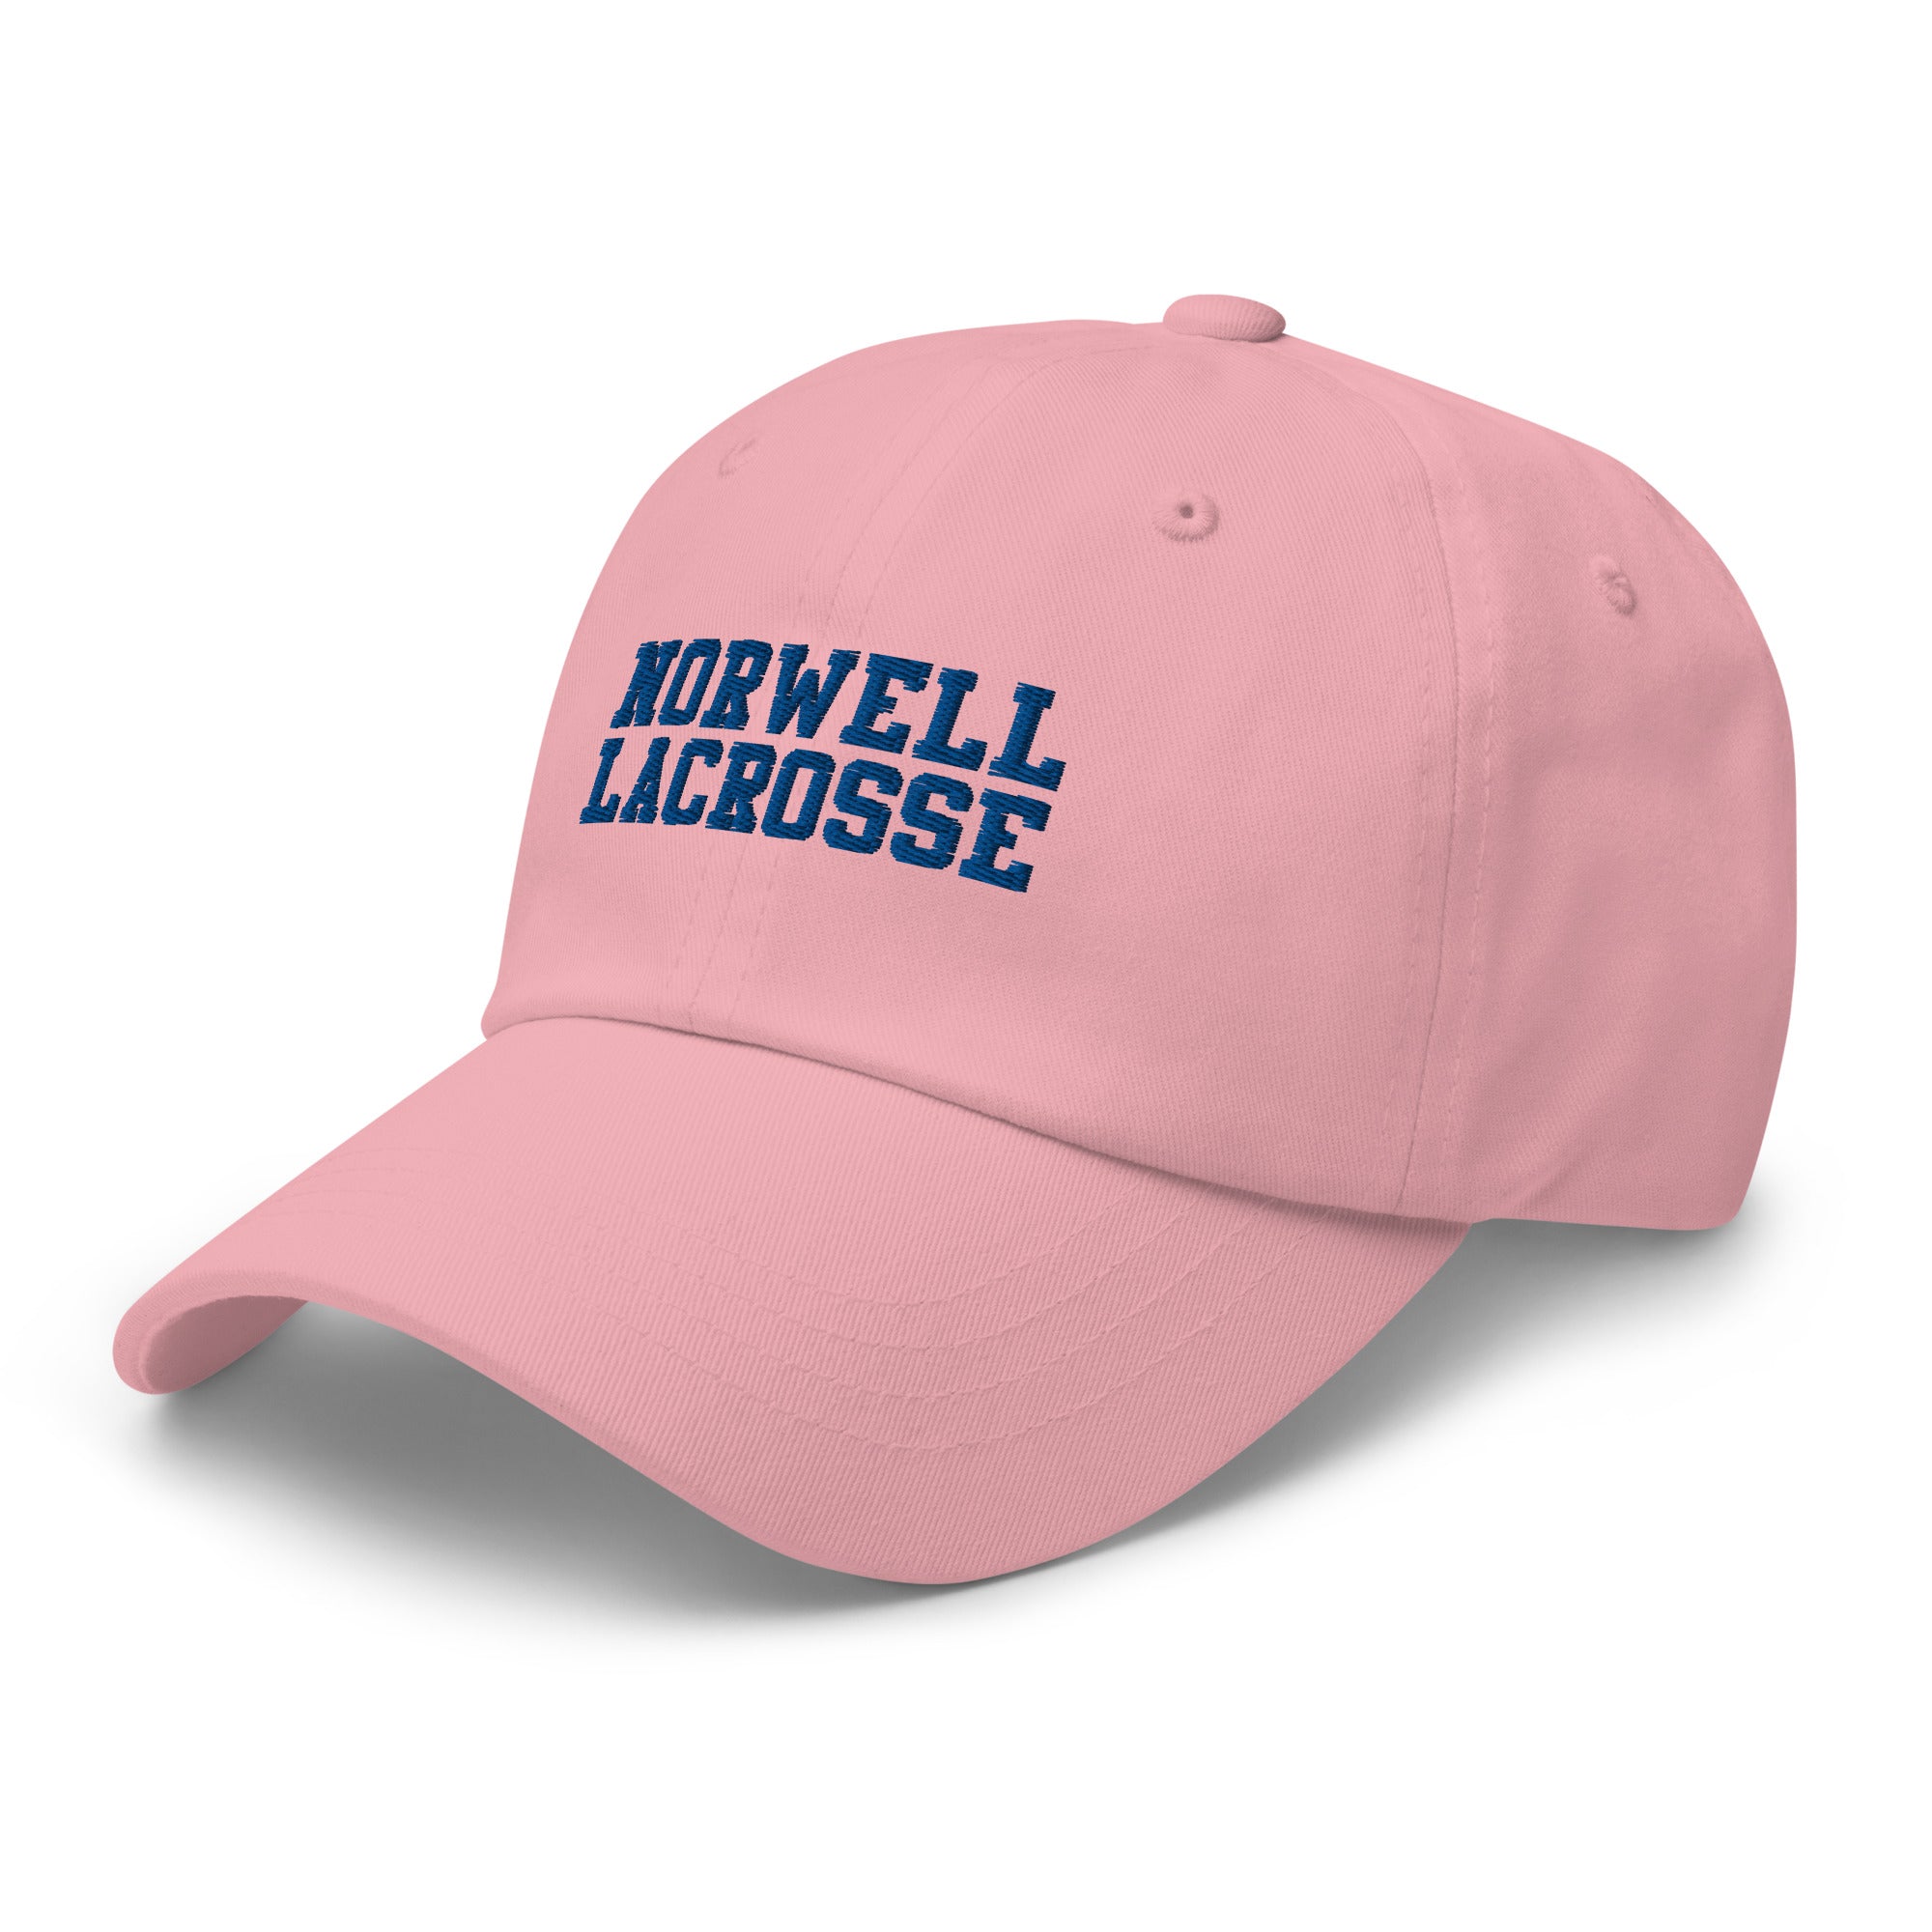 Norwell Dad hat